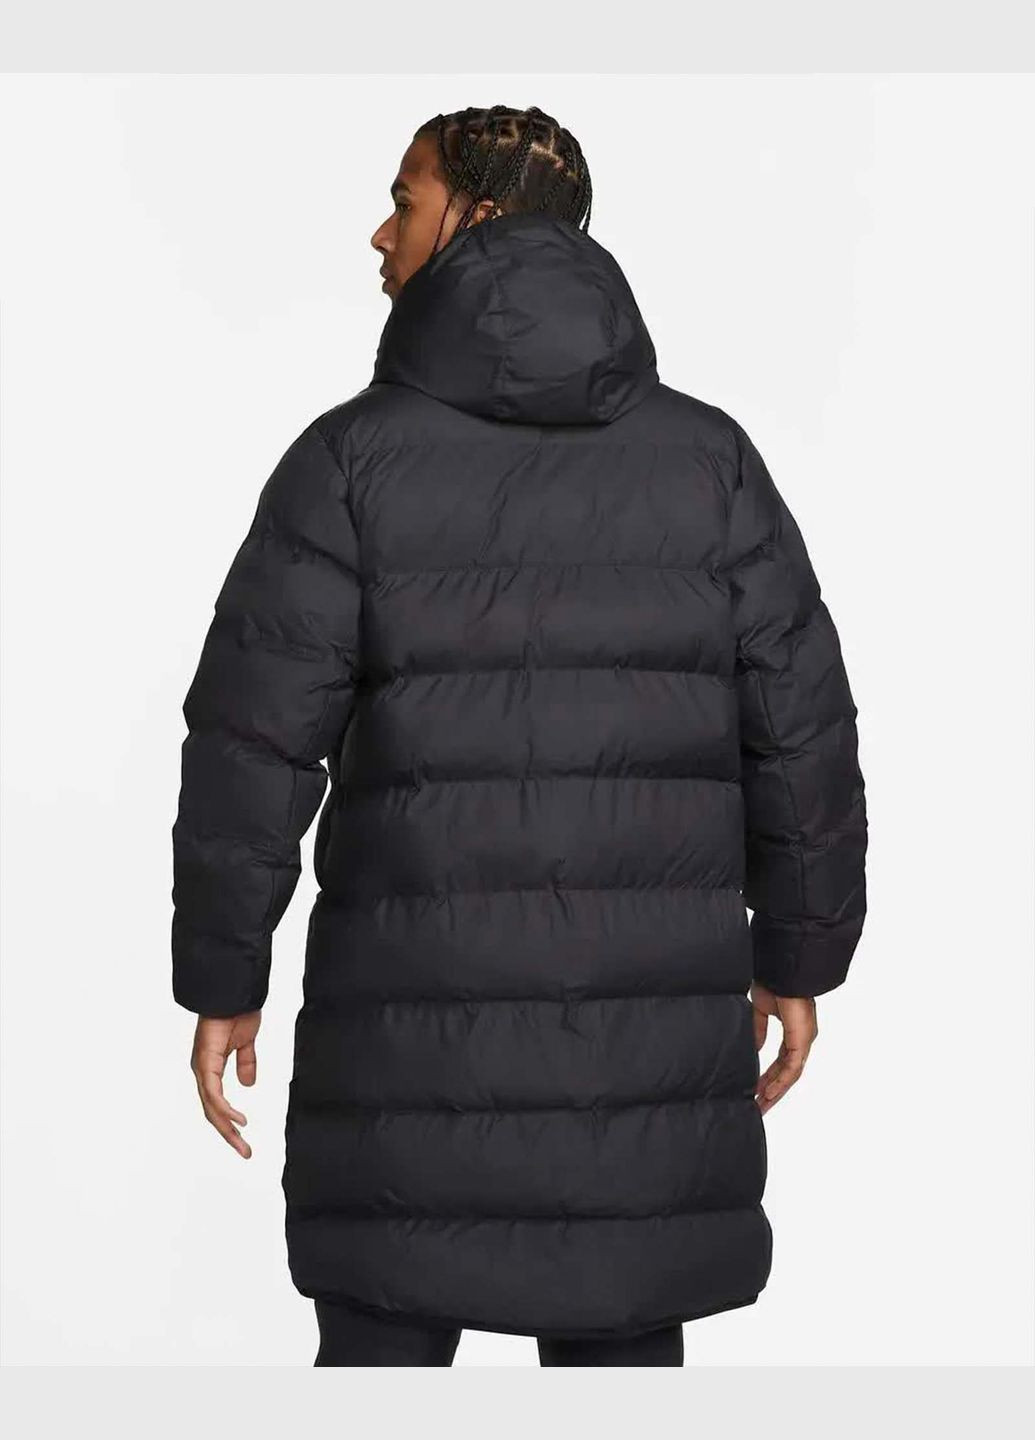 Чорна демісезонна курткапарка чоловіча storm-fit windrunner primaloft parka dr9609-010 зима чорна Nike